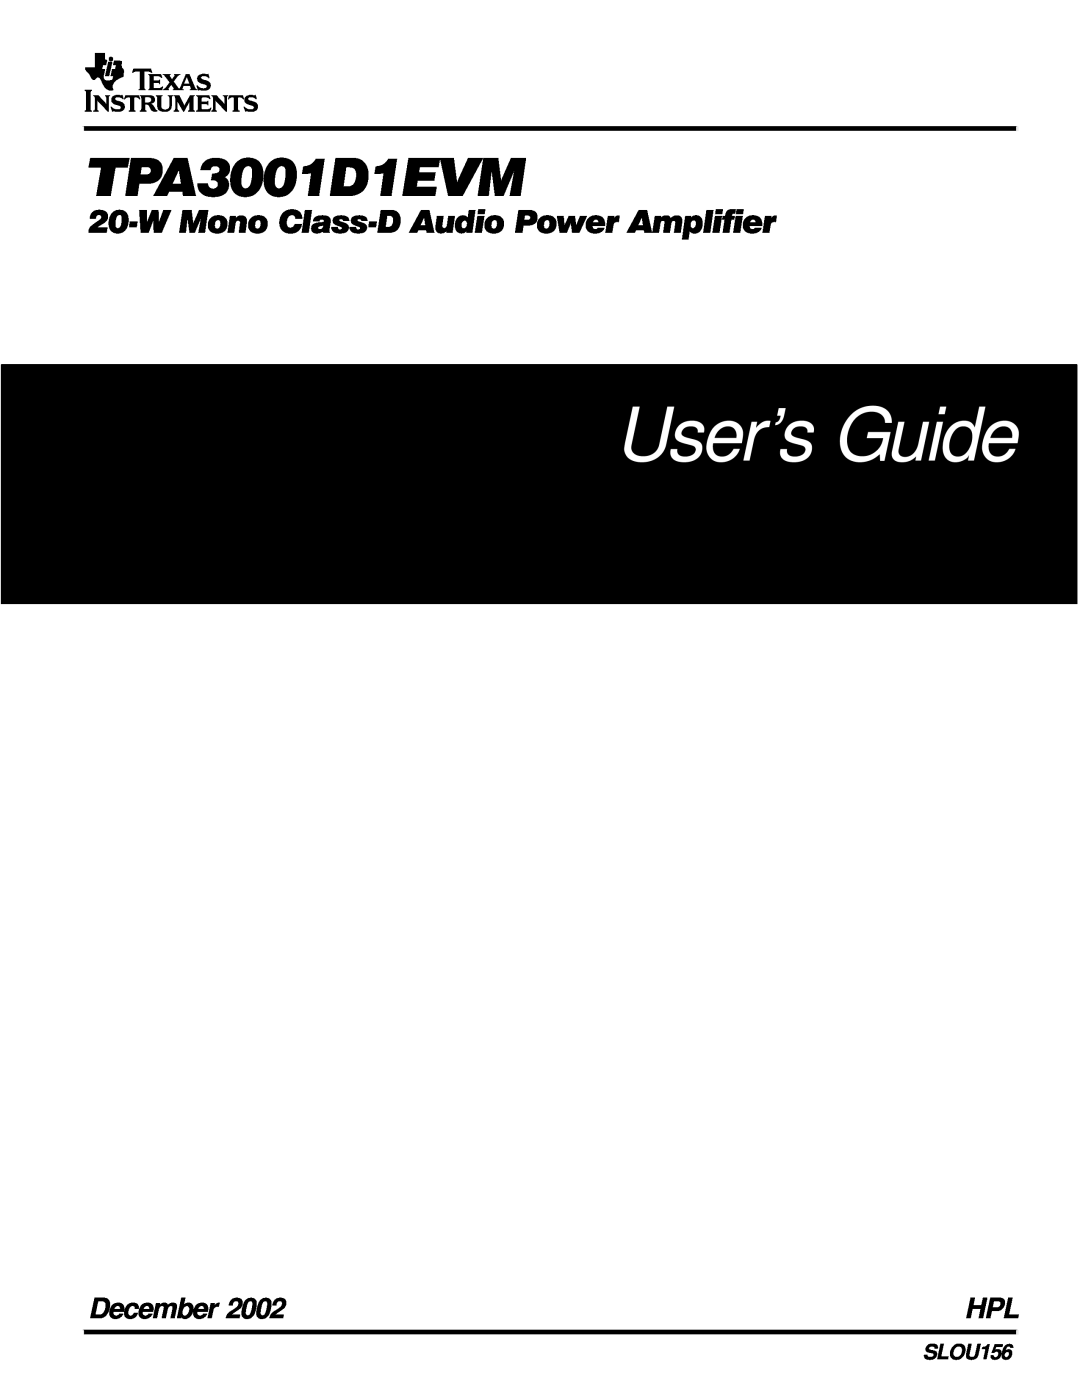 Texas Instruments TPA3001D1EVM manual User’s Guide, December, SLOU156 